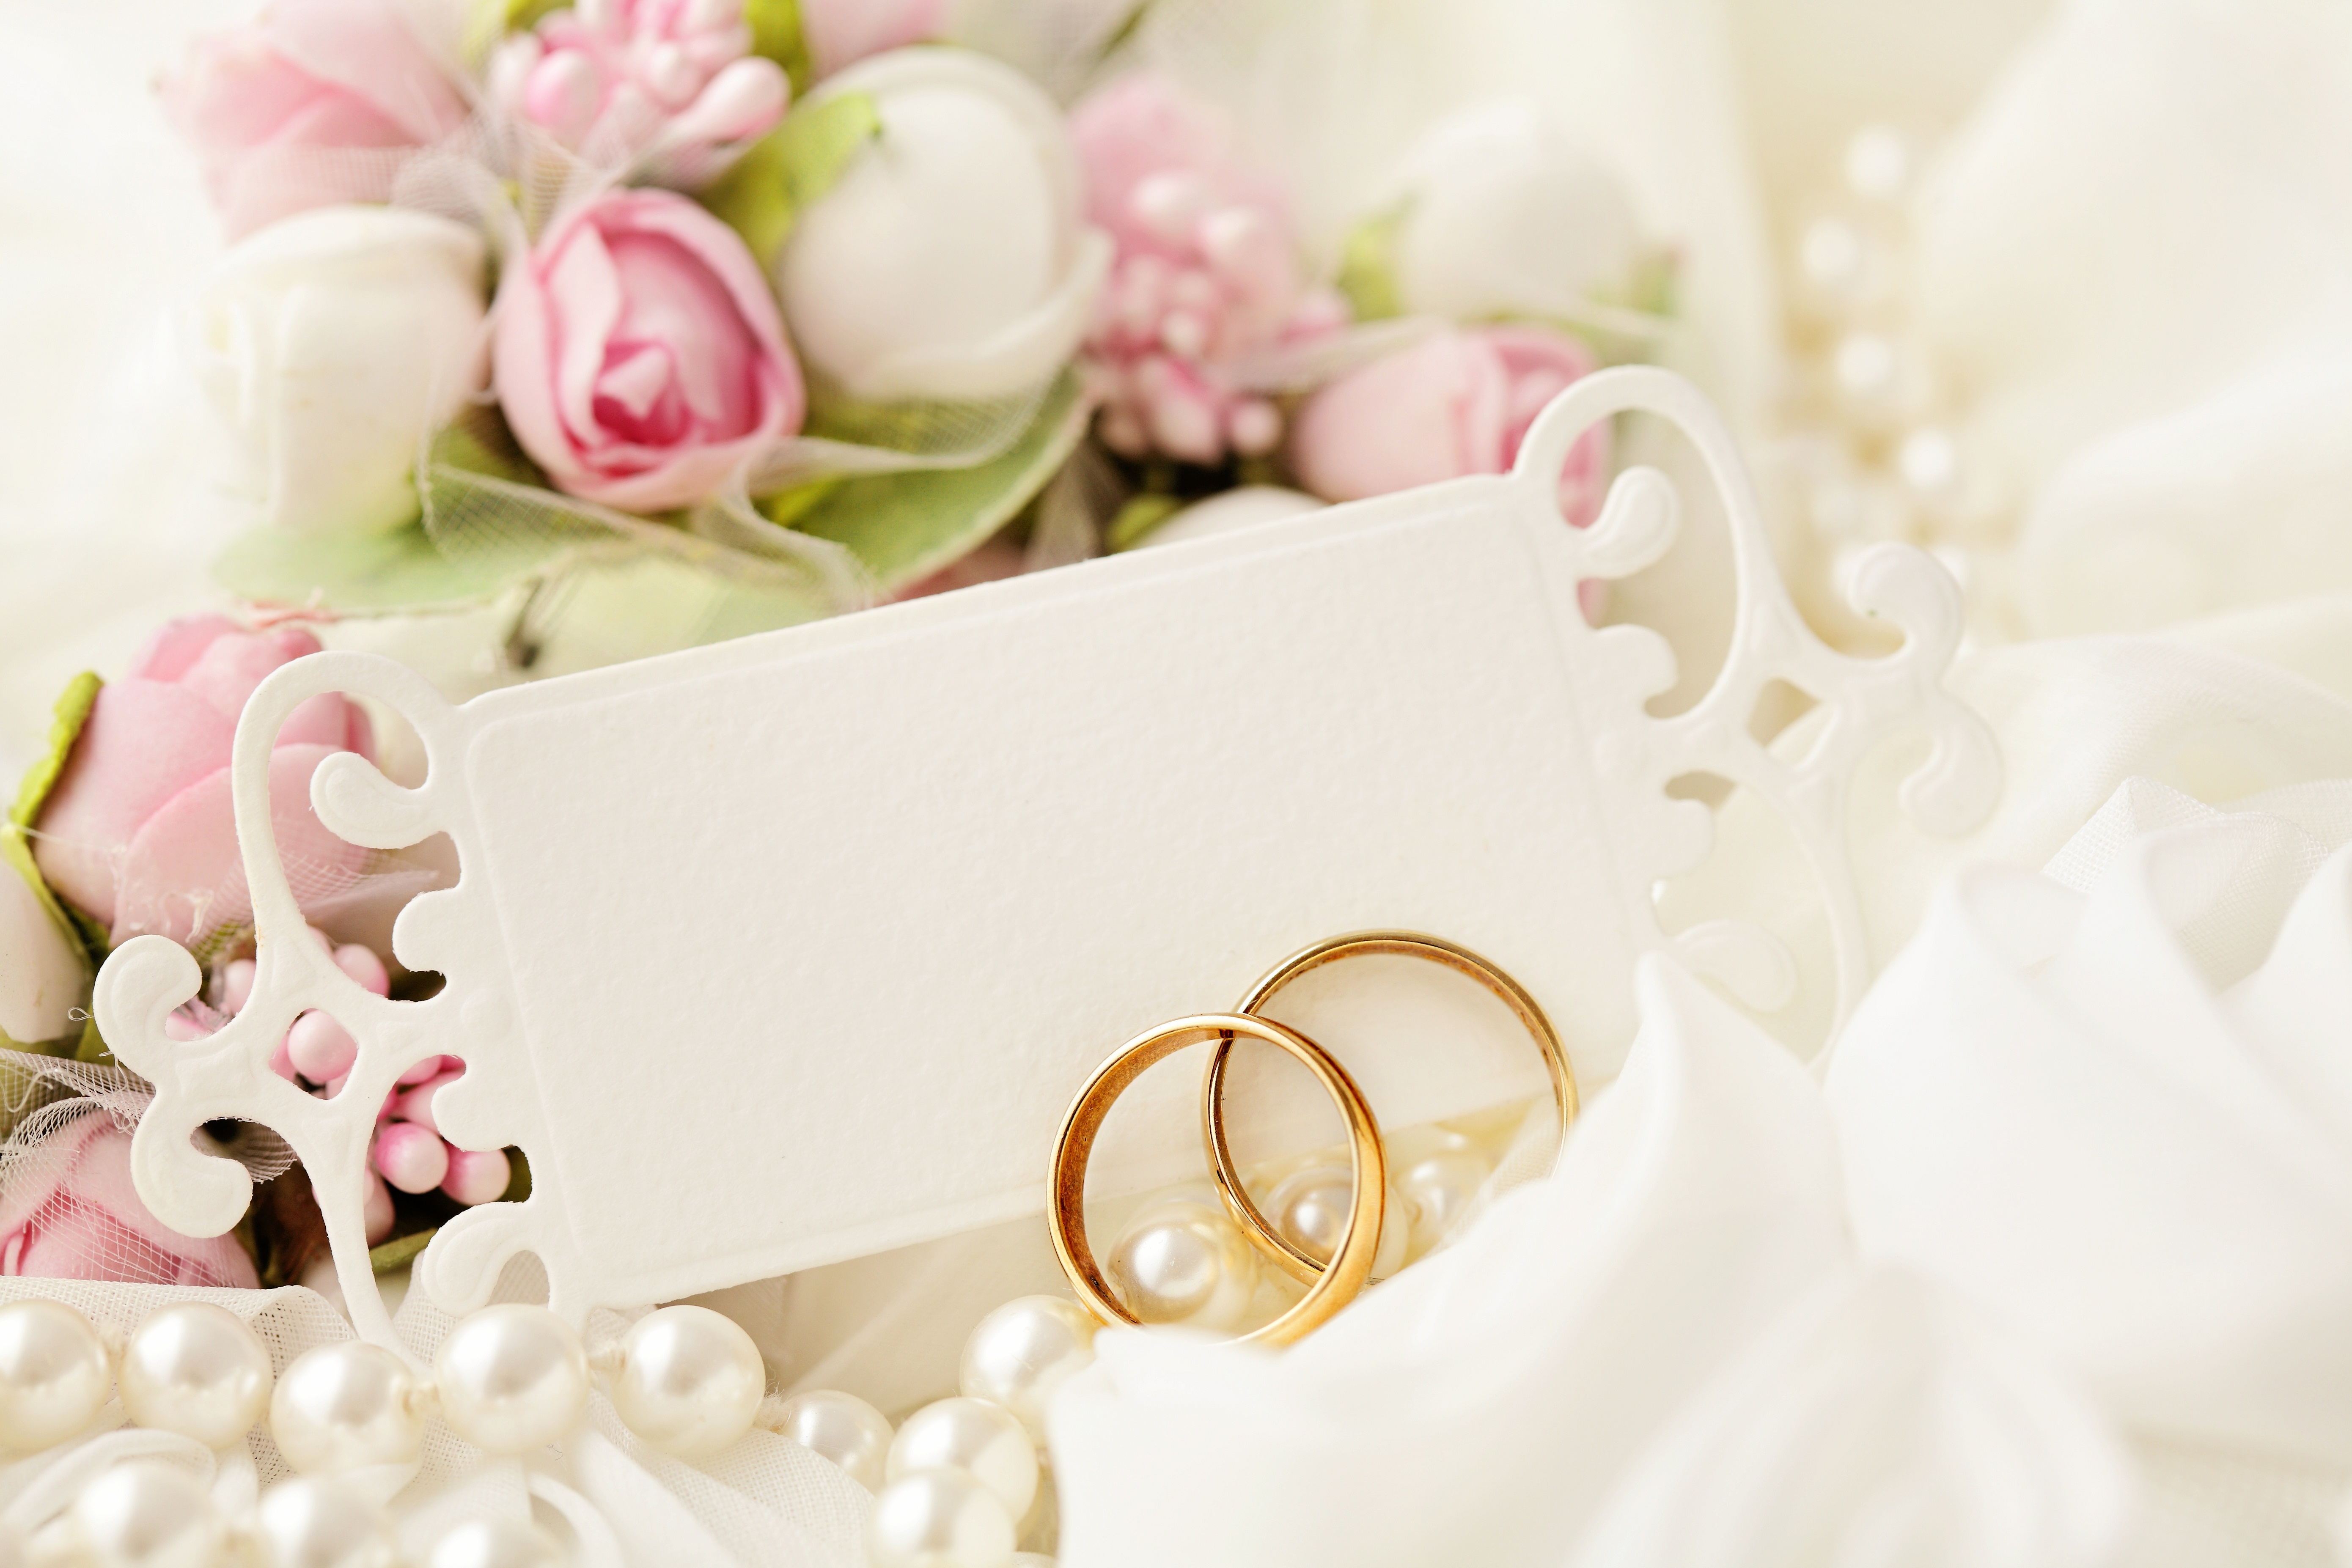 hochzeit壁紙,ピンク,結婚式用品,パーティー用品,結婚式の好意,結婚指輪